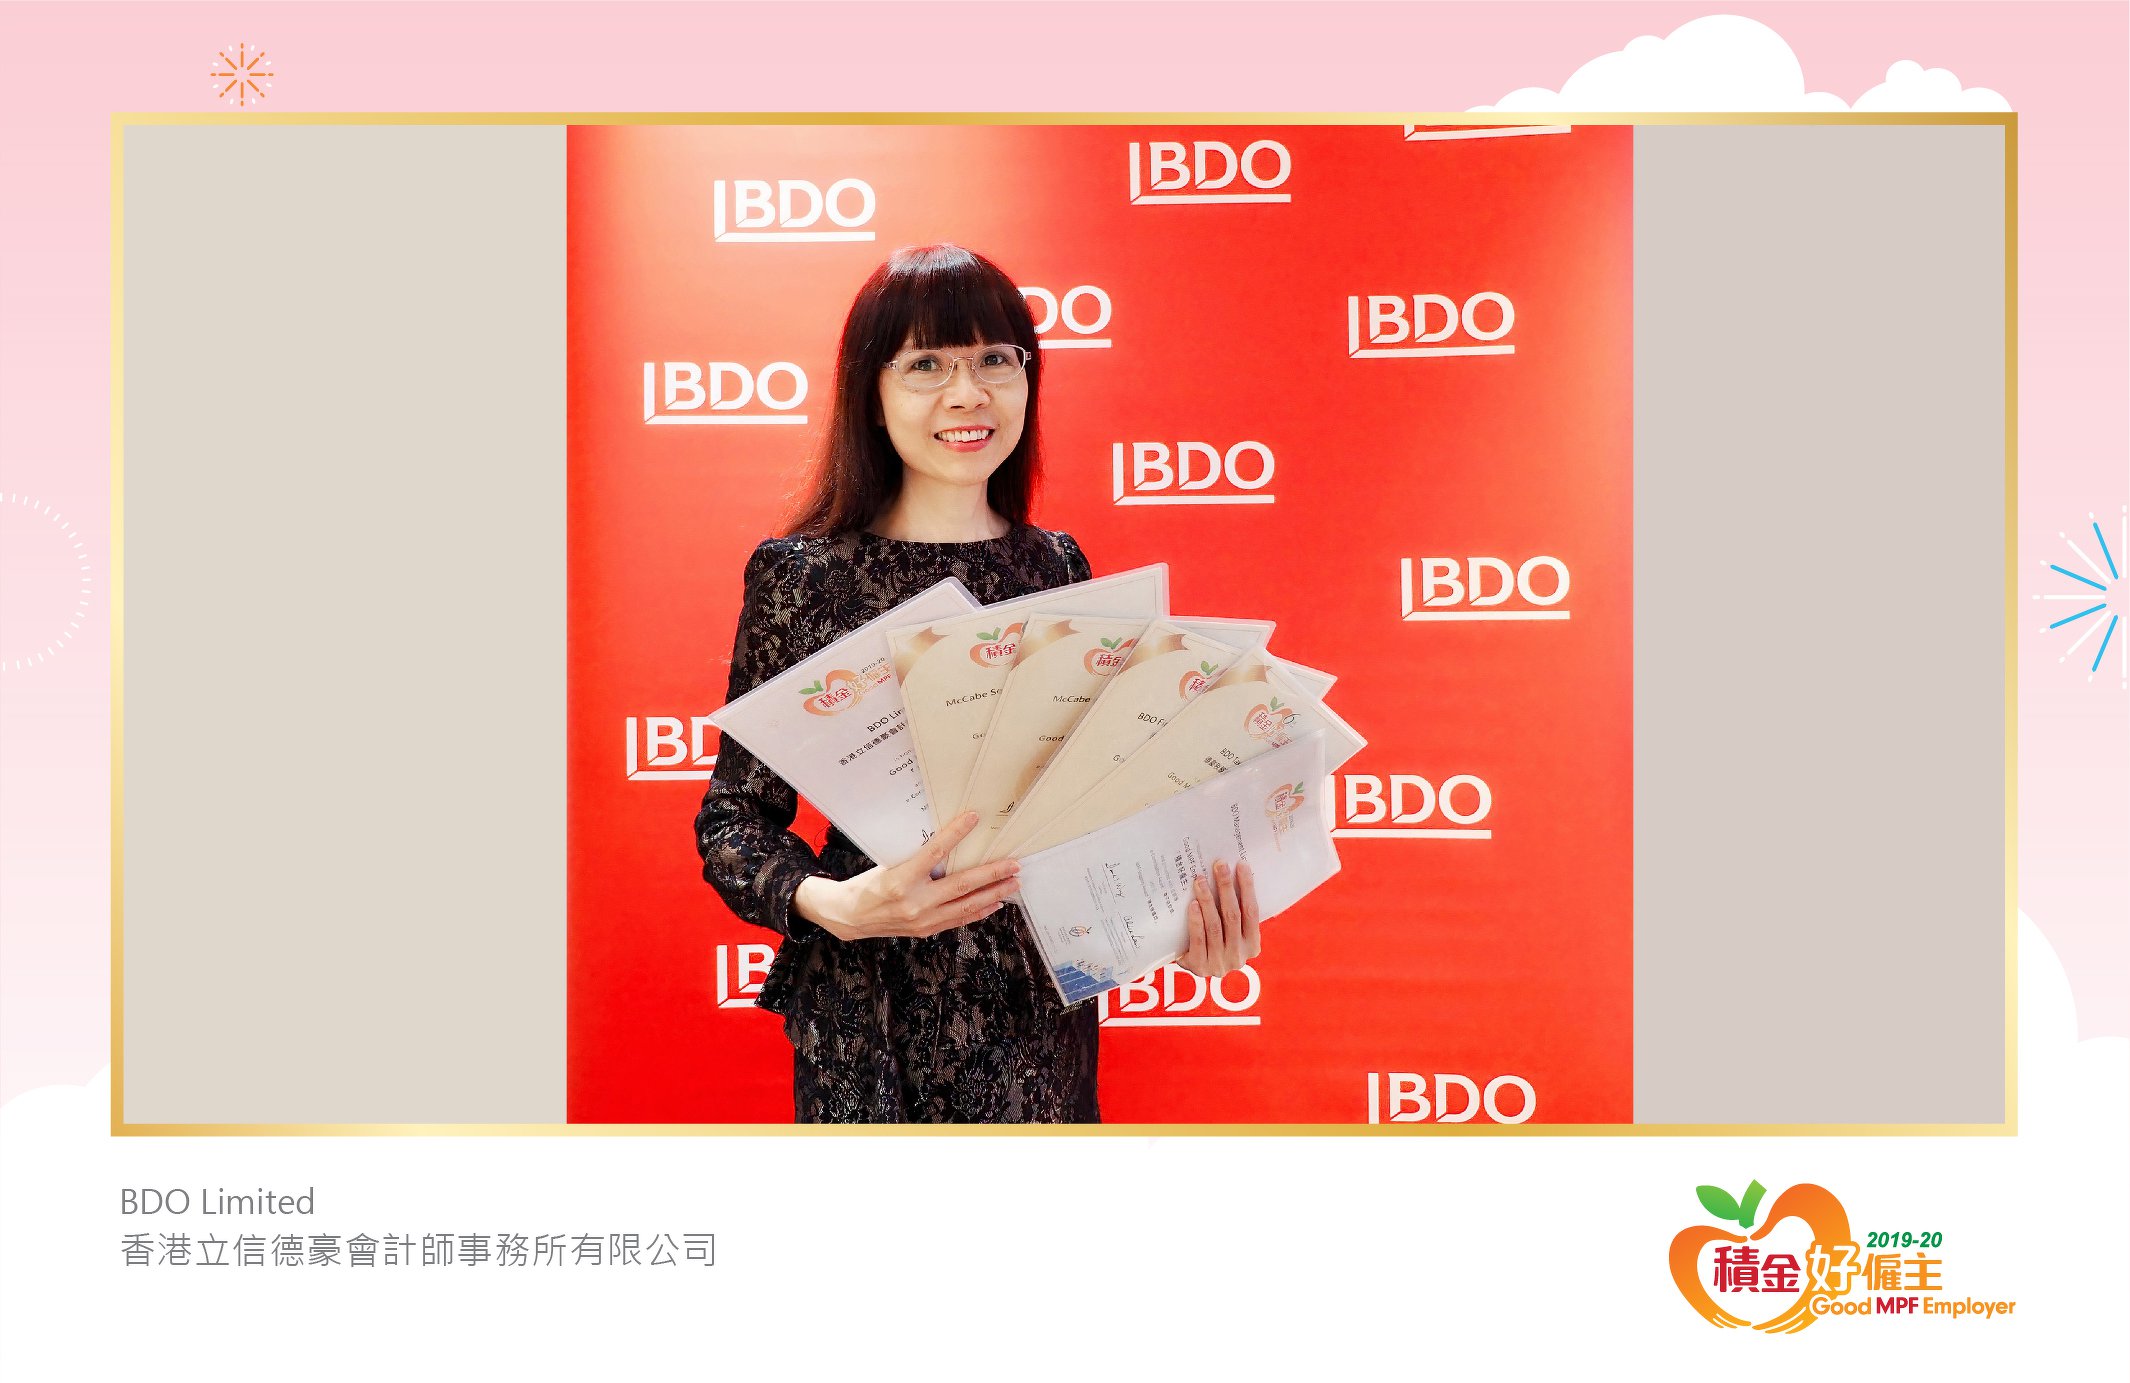 BDO Limited 香港立信德豪會計師事務所有限公司